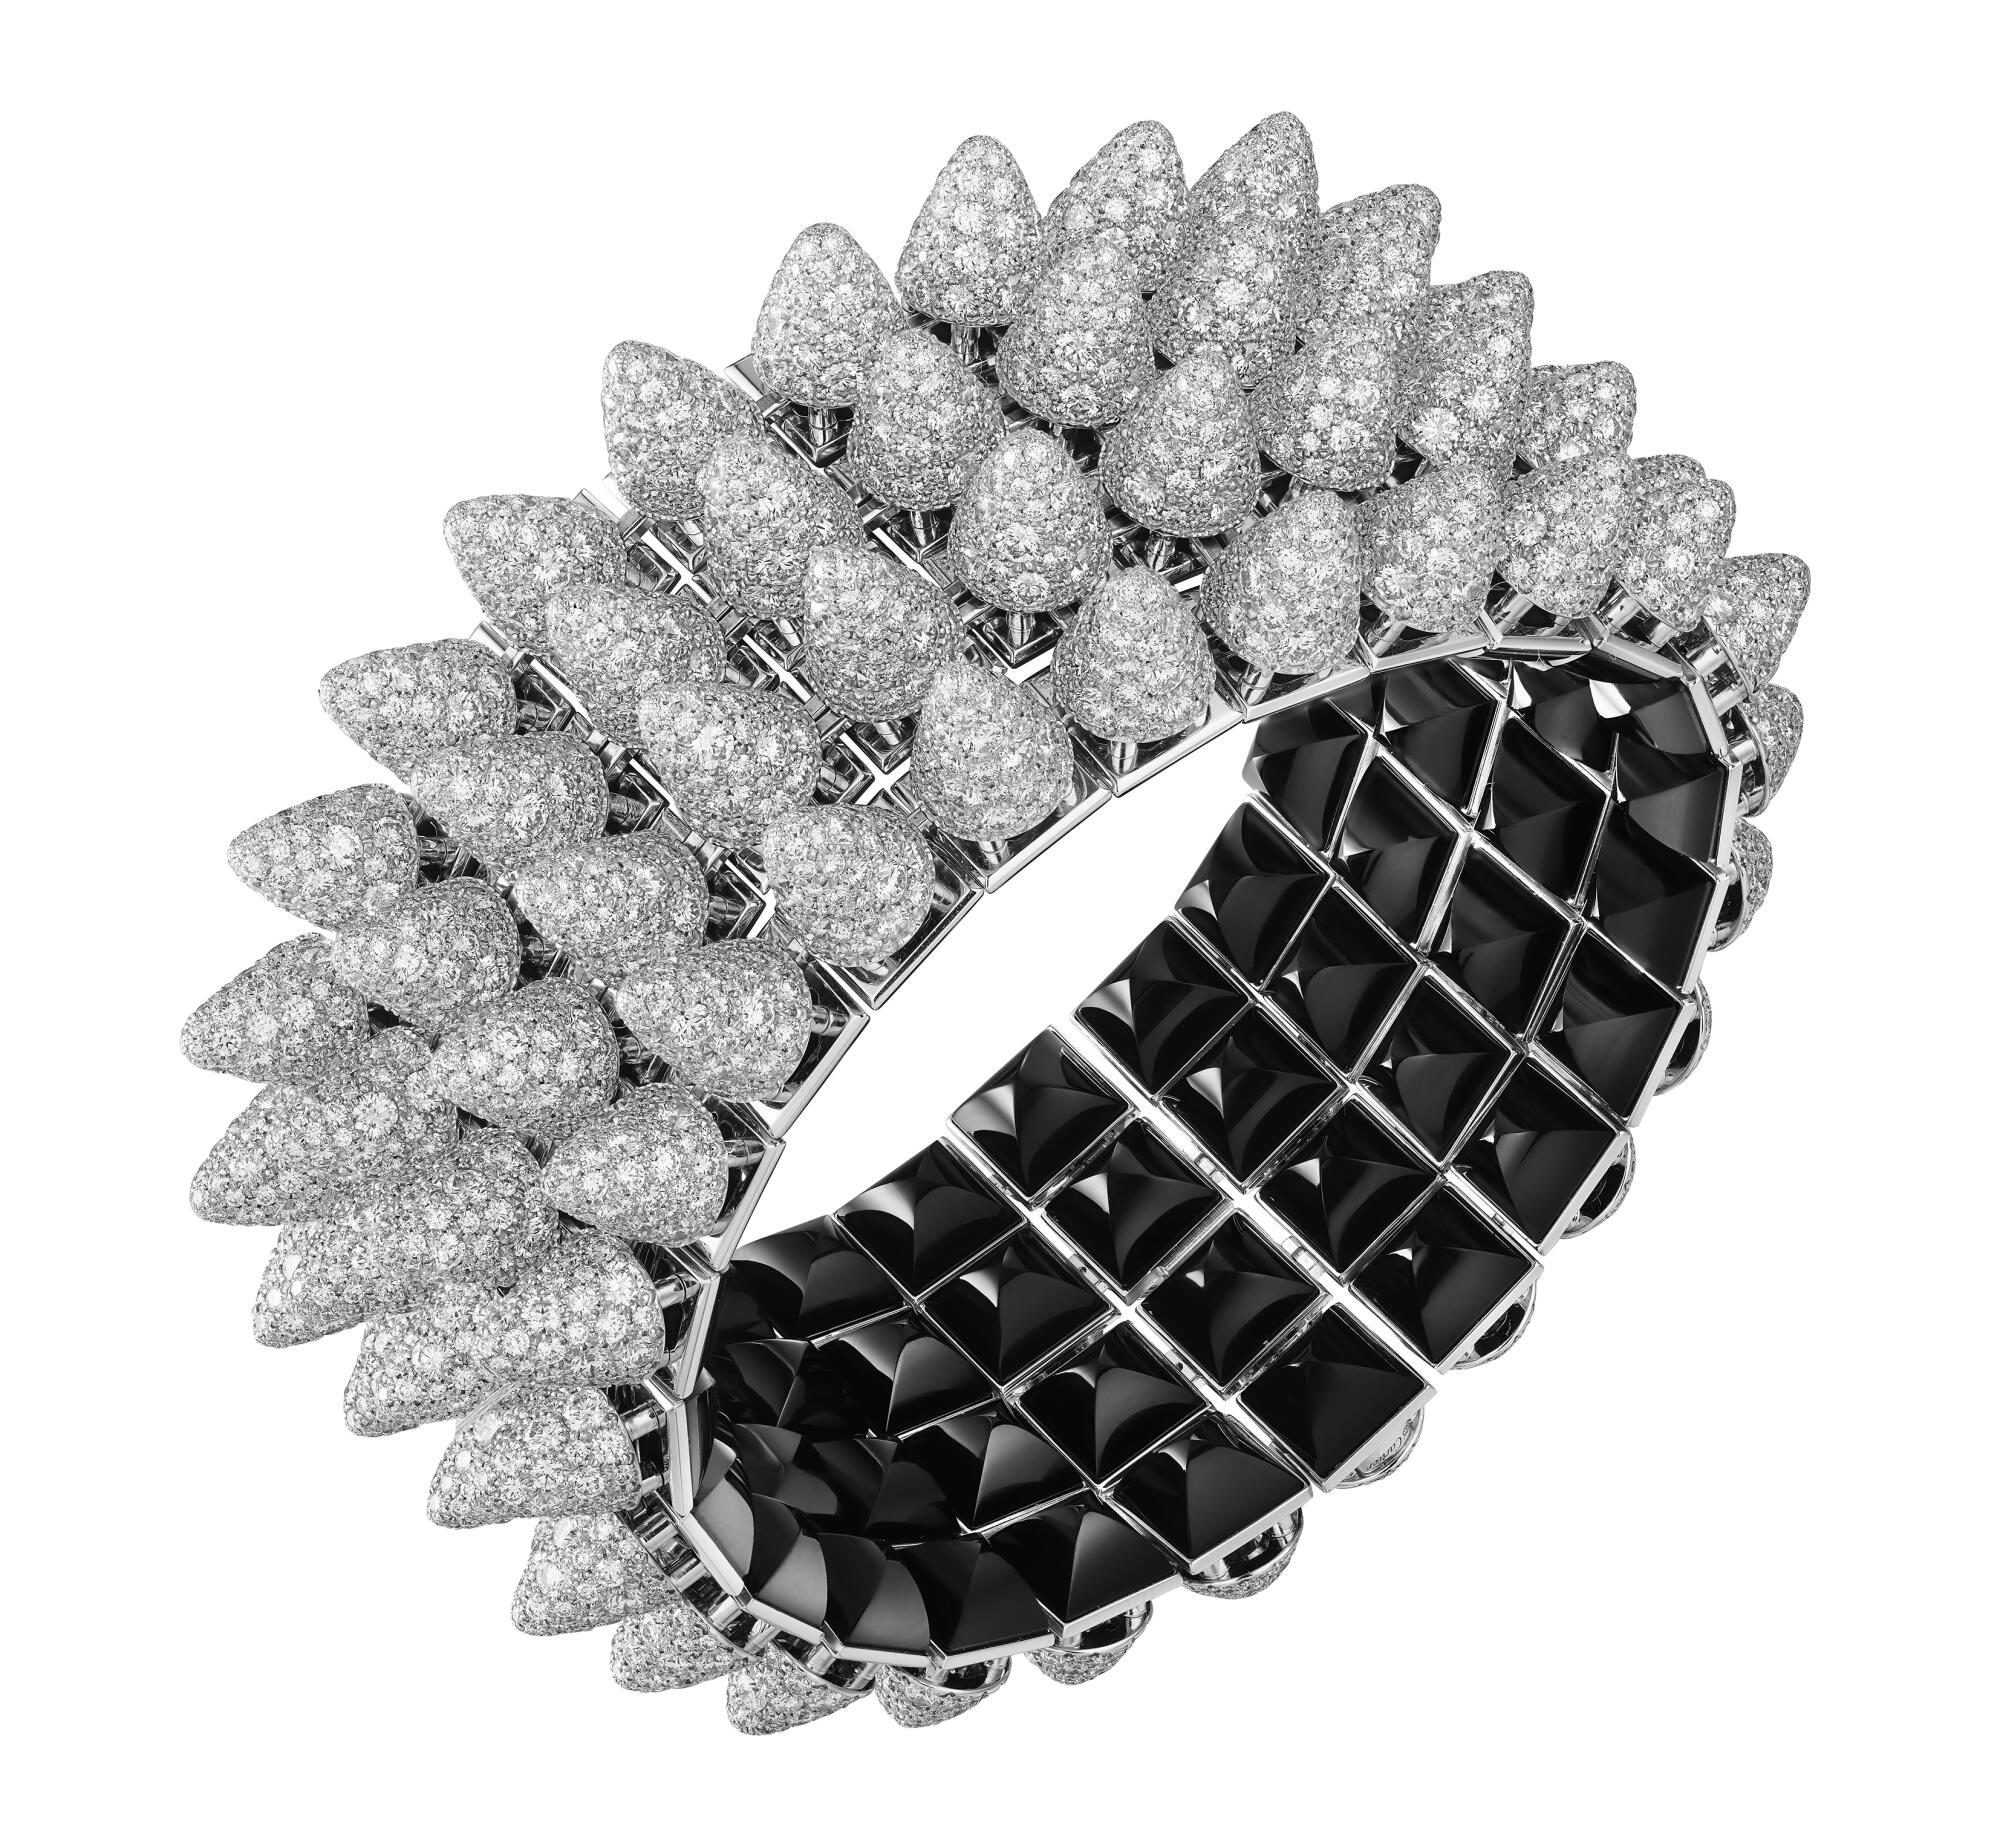 Bracelet with diamond studs and onyx beads